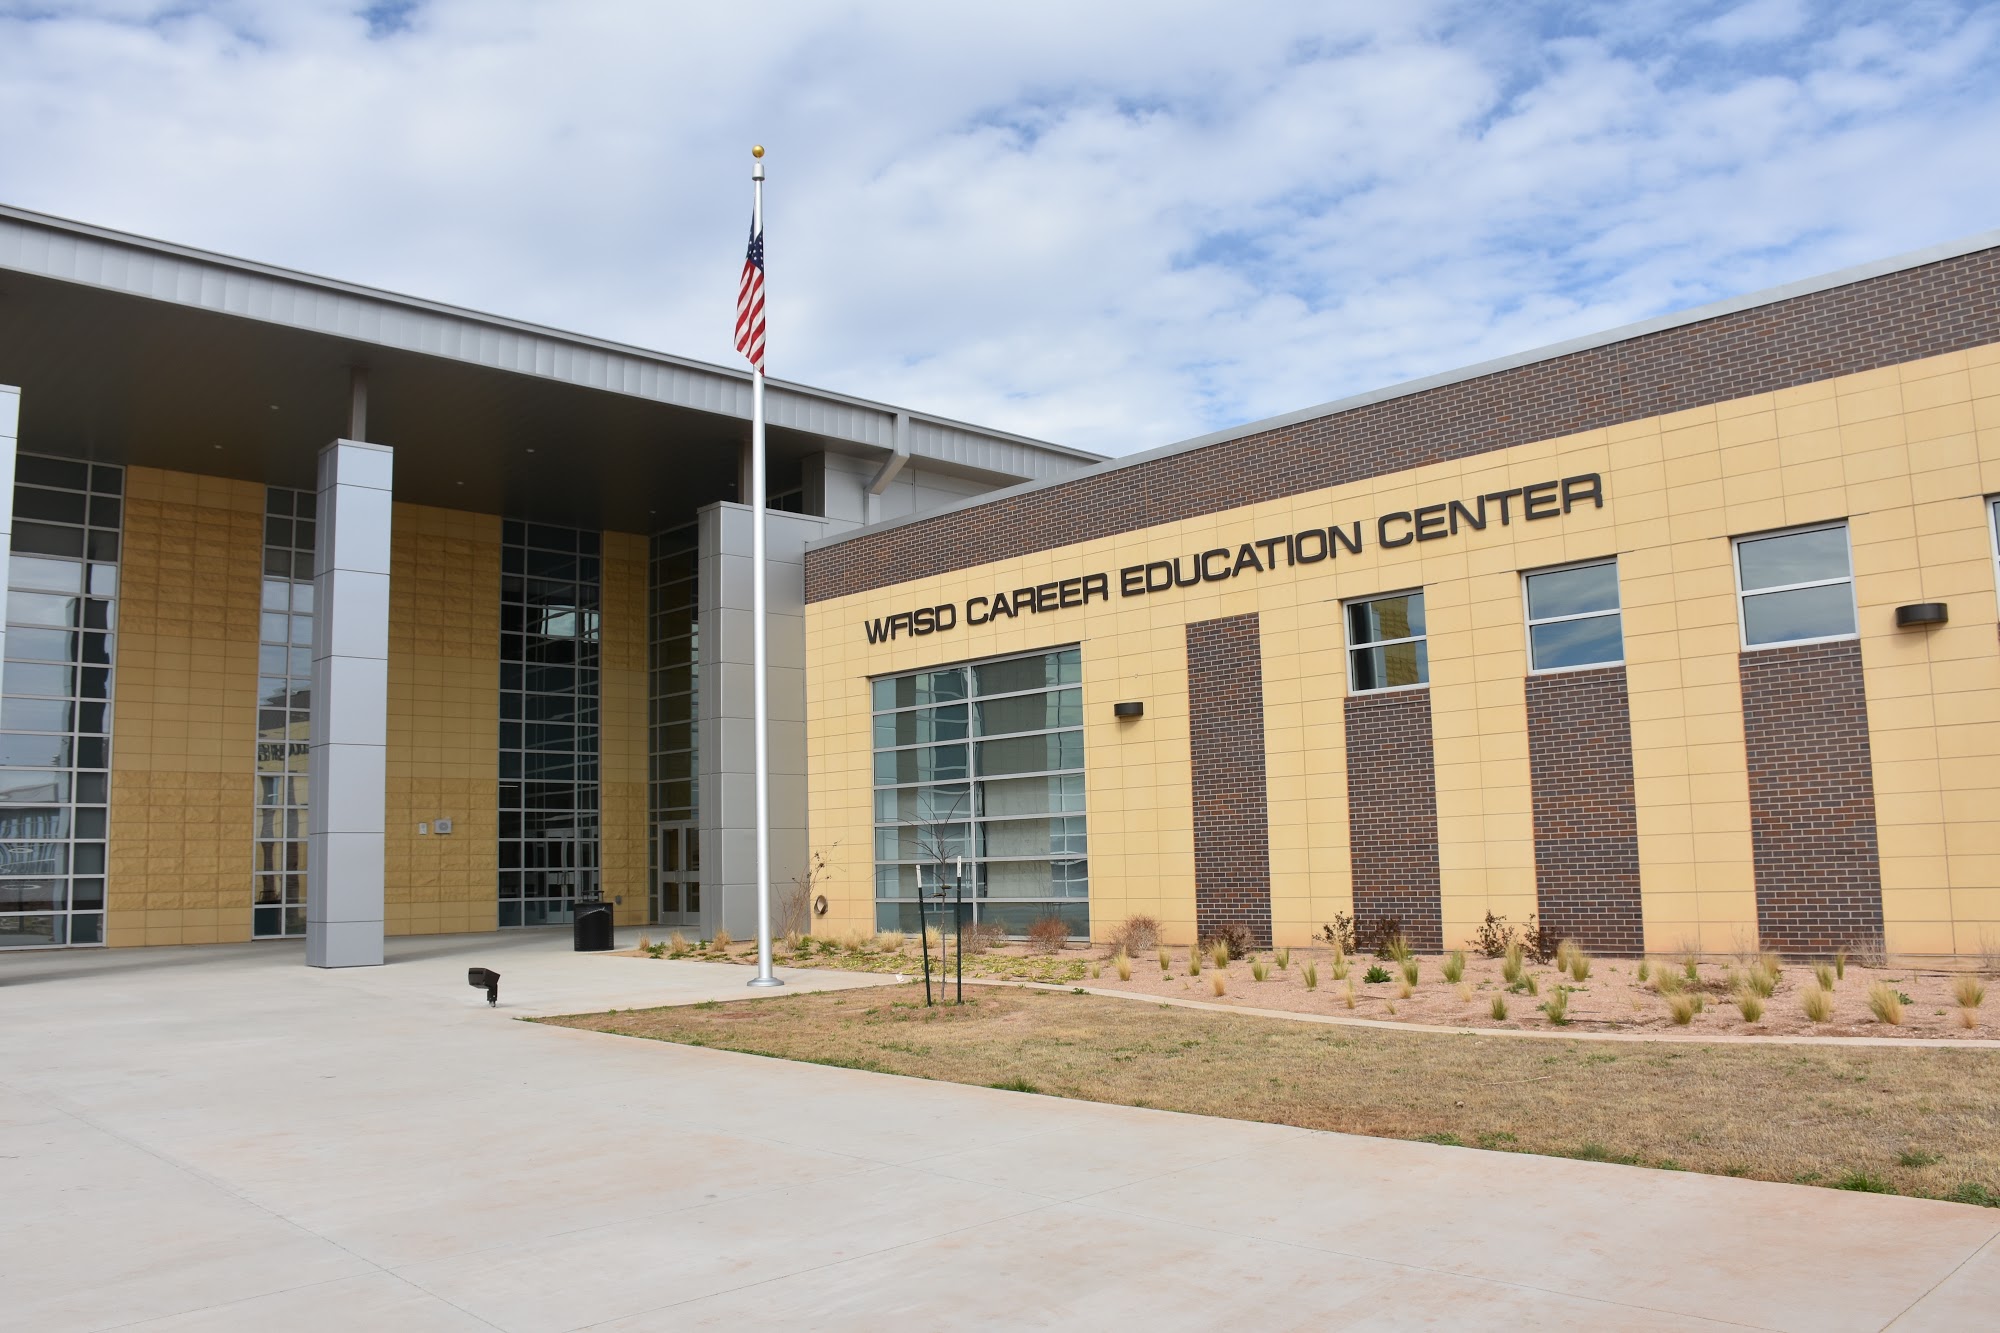 WFISD Career Education Center